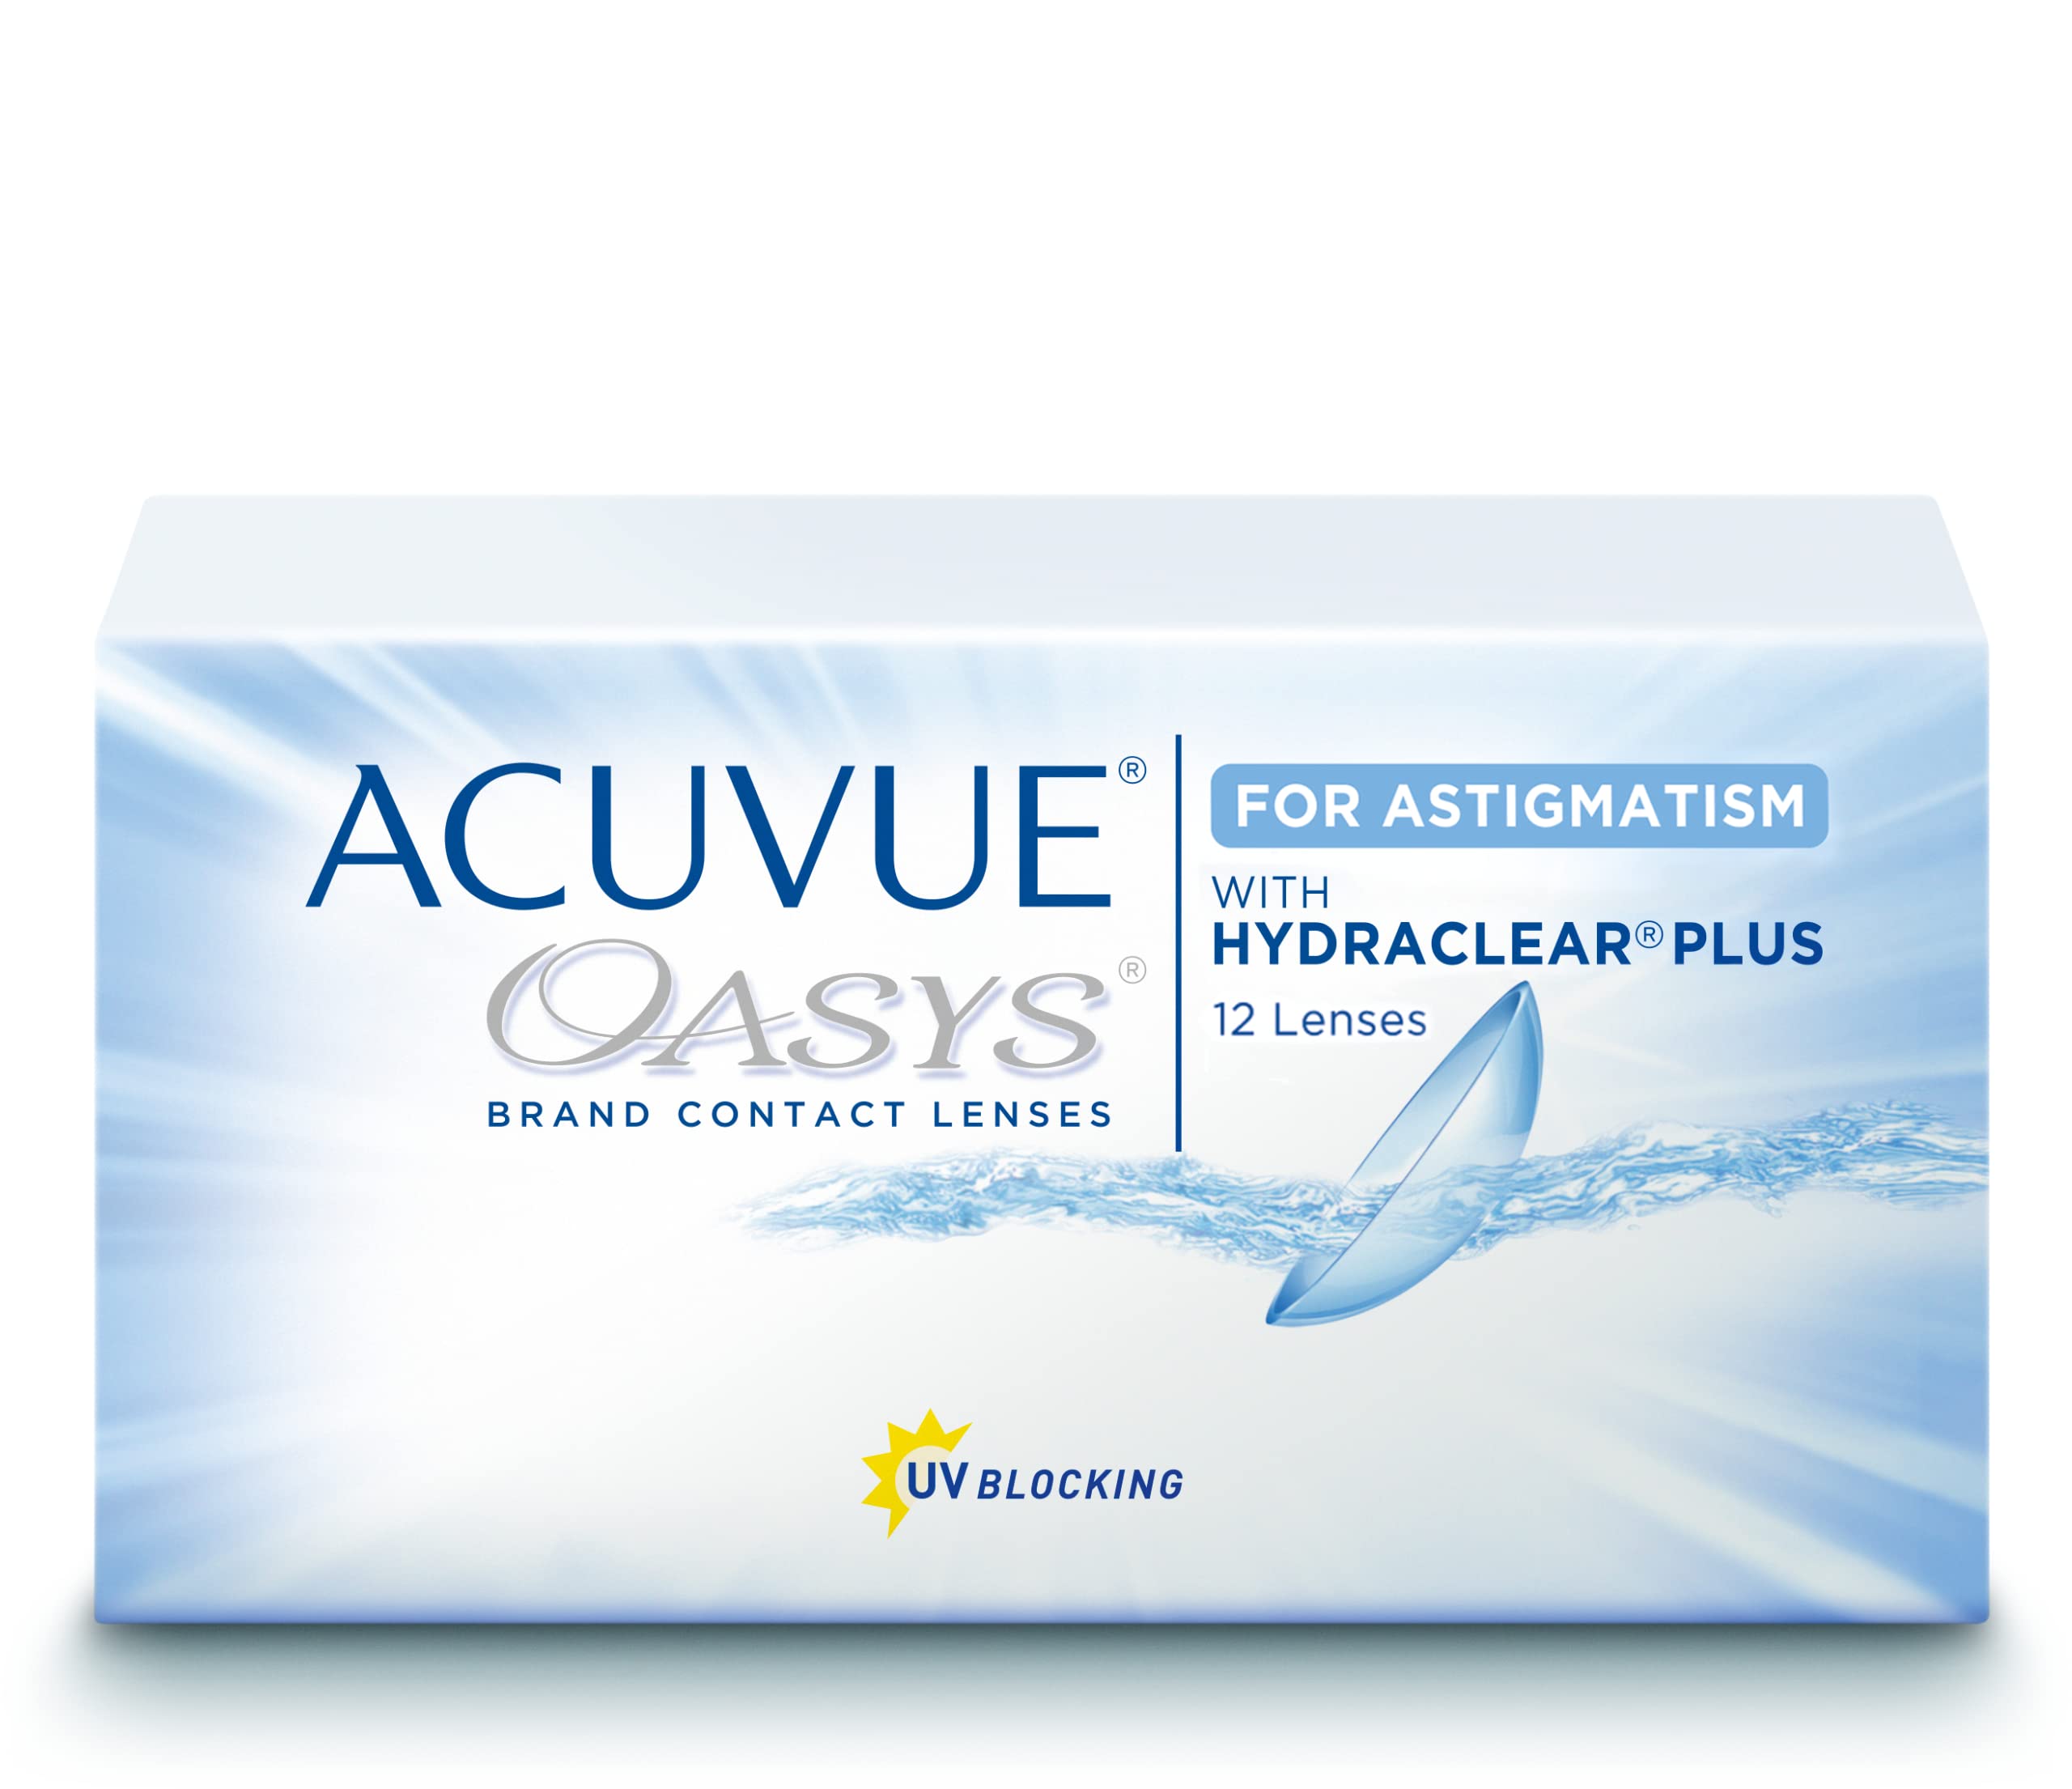 Acuvue Oasys for Astigmatism 2-Wochenlinsen weich, 12 Stück/BC 8.6 mm/DIA 14.5 / CYL -1.25 / Achse 90 / -8 Dioptrien